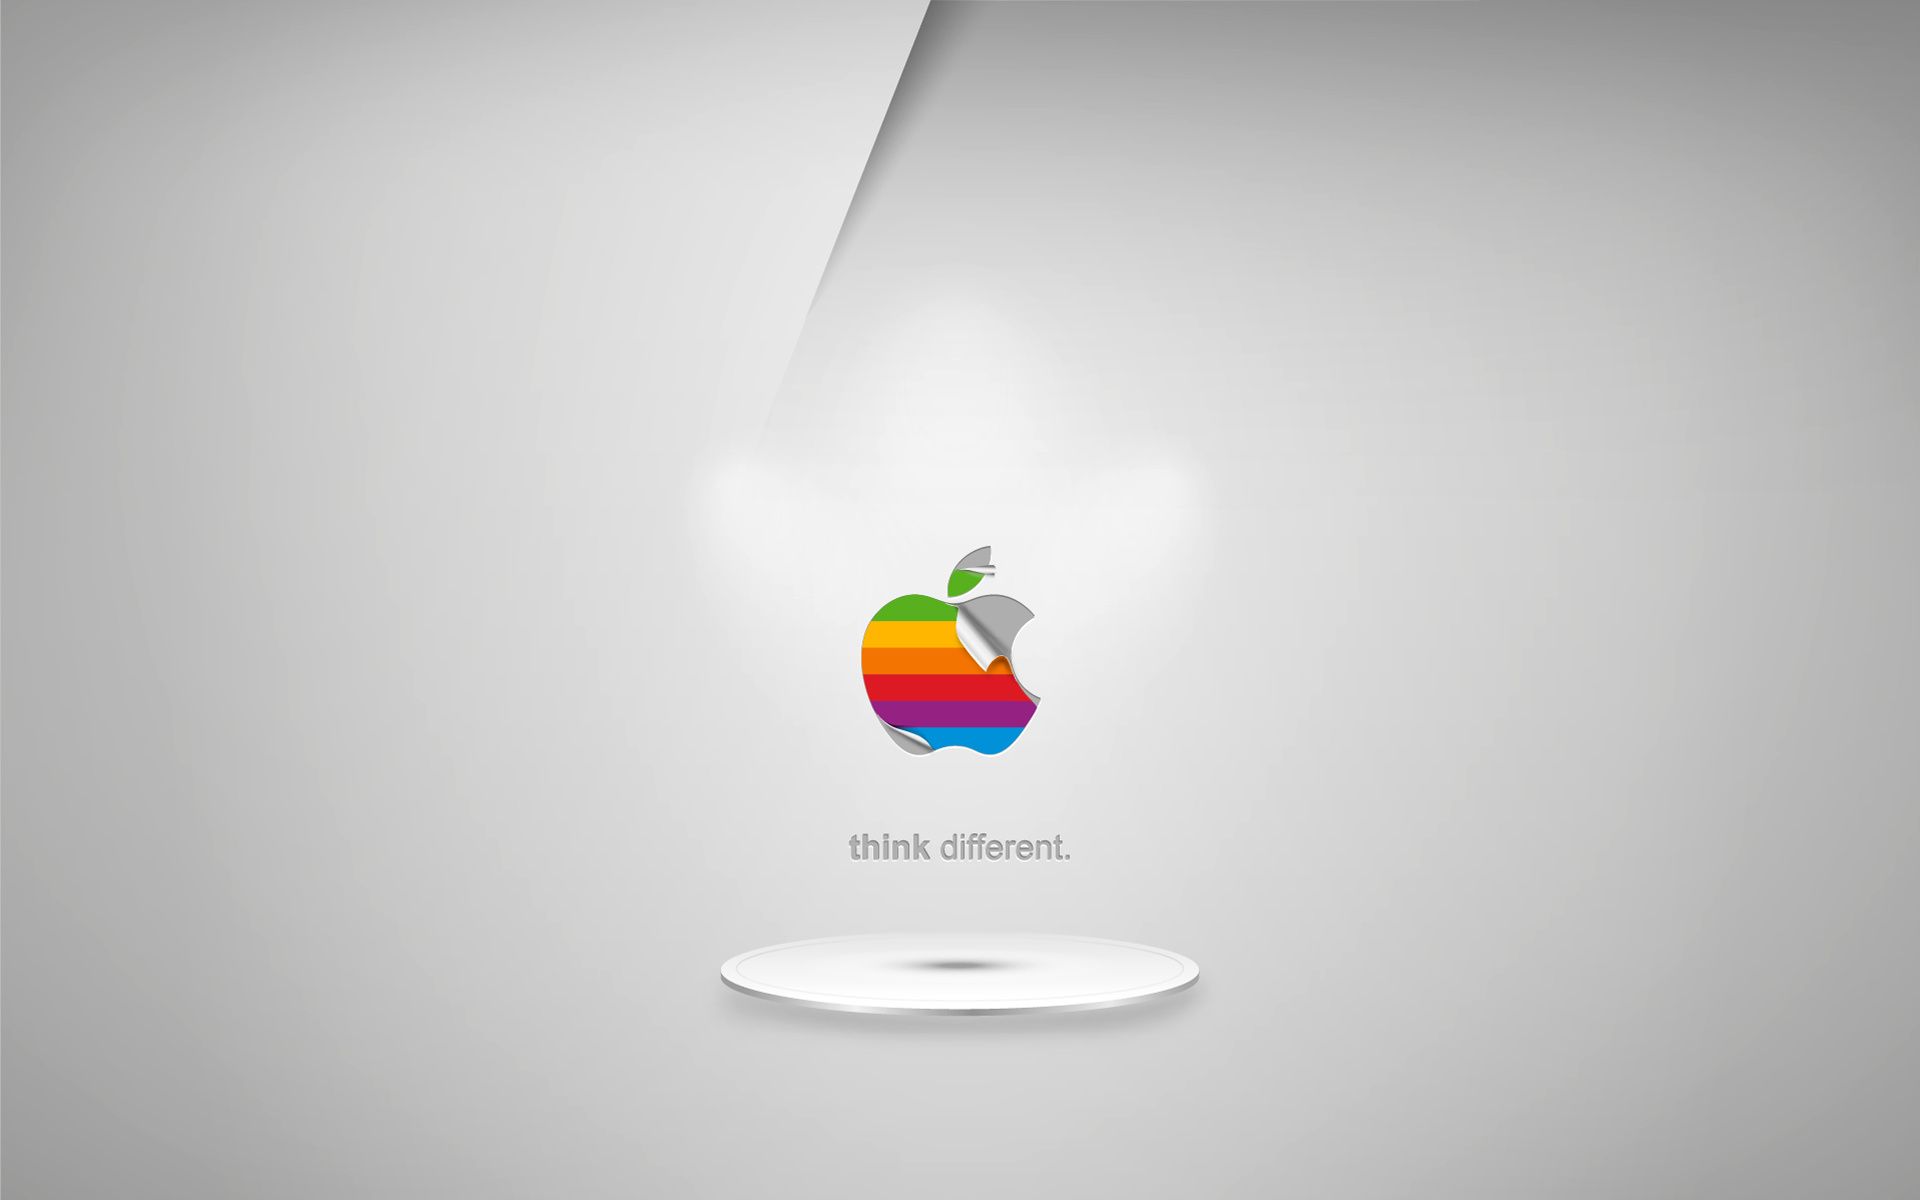 Wallpaper apple, think different, ipad, emblem, brand name, iphone ...